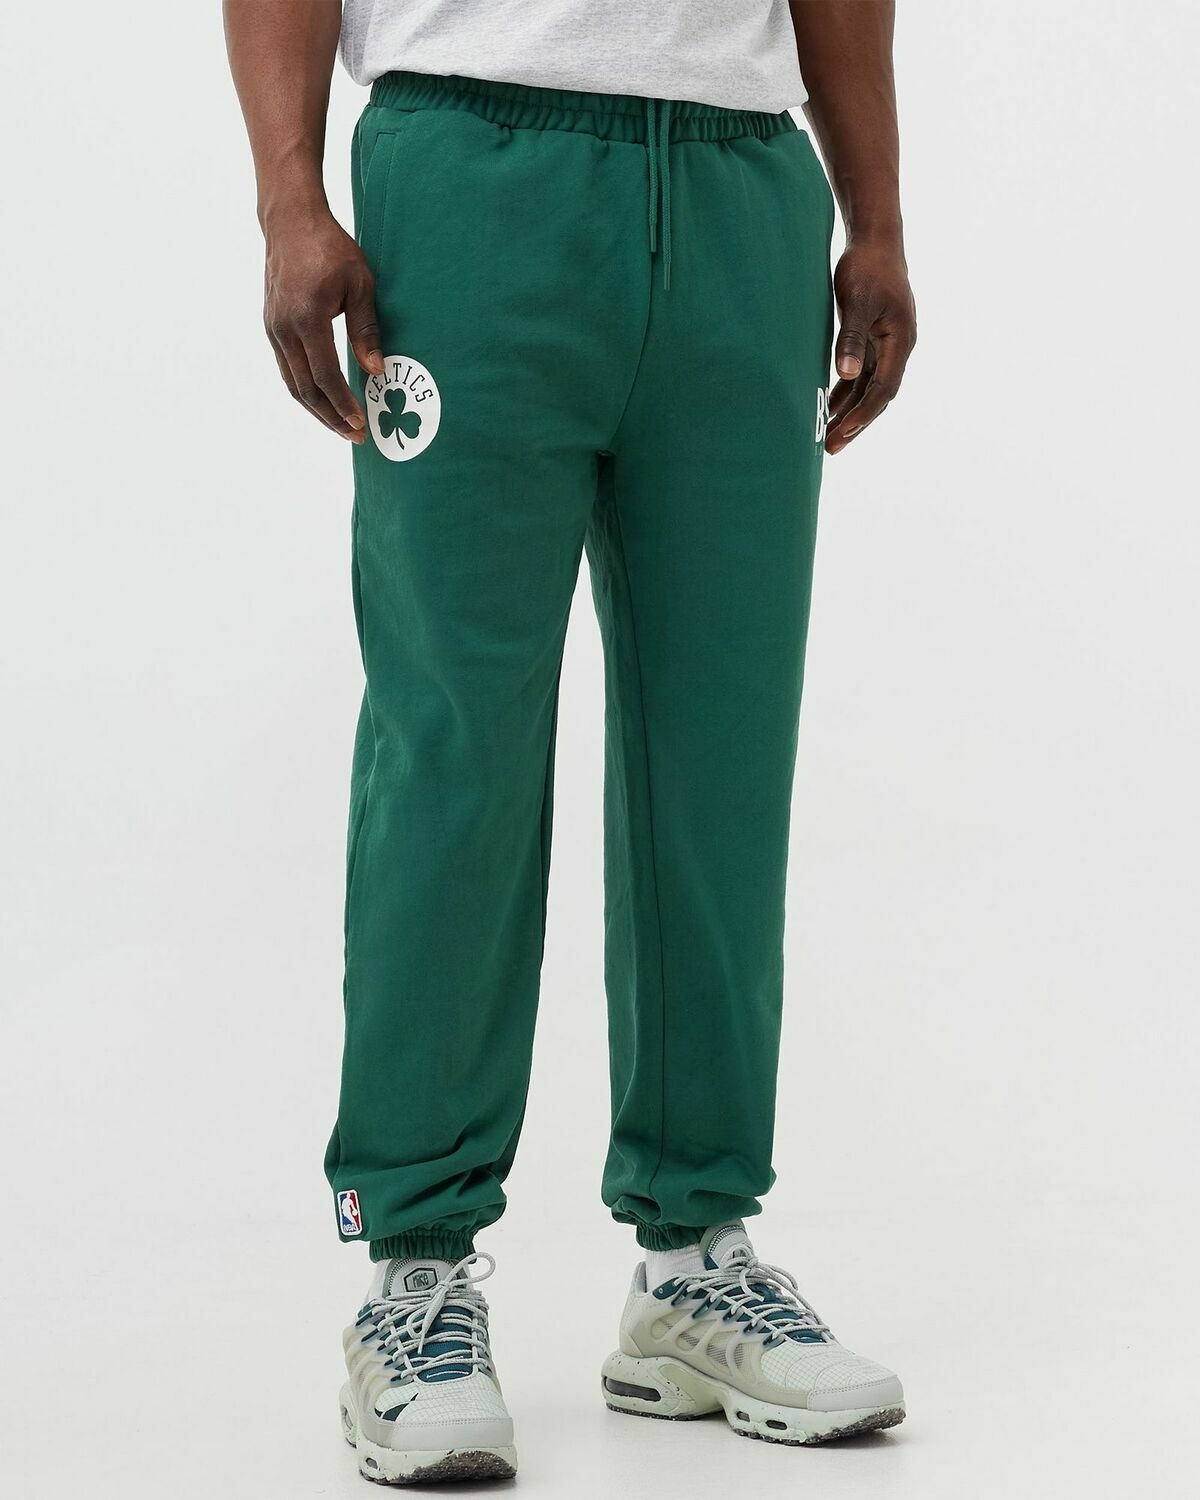 Bstn Brand Bstn & Nba Boston Celtics Sweatpants Green - Mens - Sweatpants